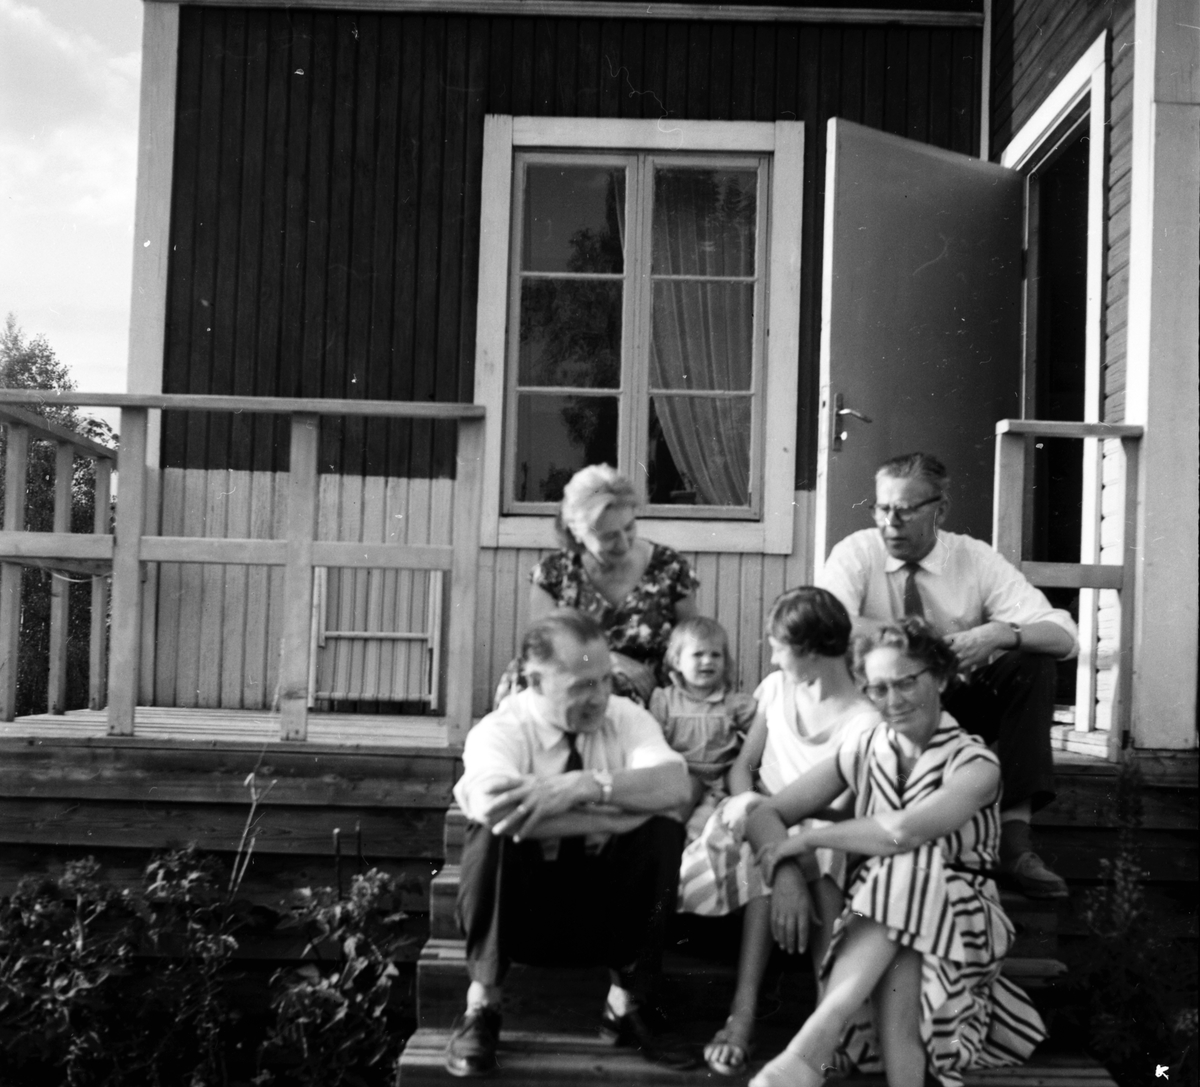 Belse Hanebo,
Gust. Nordanås torp rustas,
20 Juli 1959